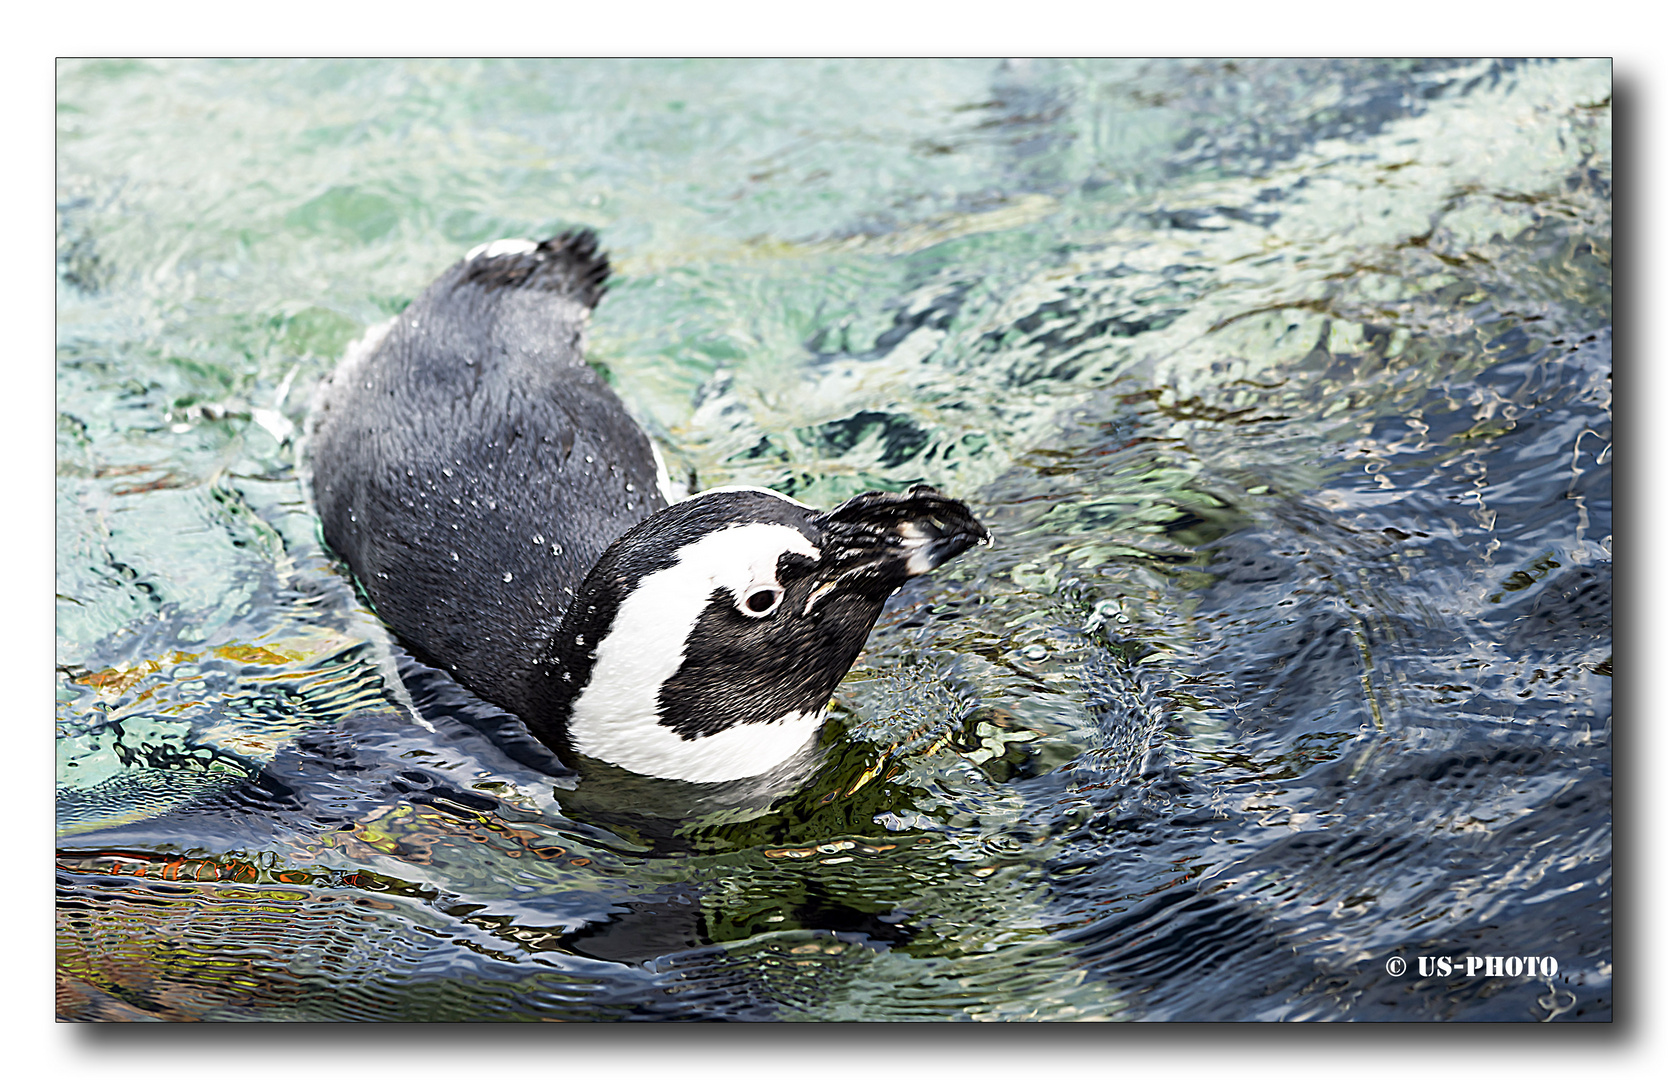 Pinguin #2